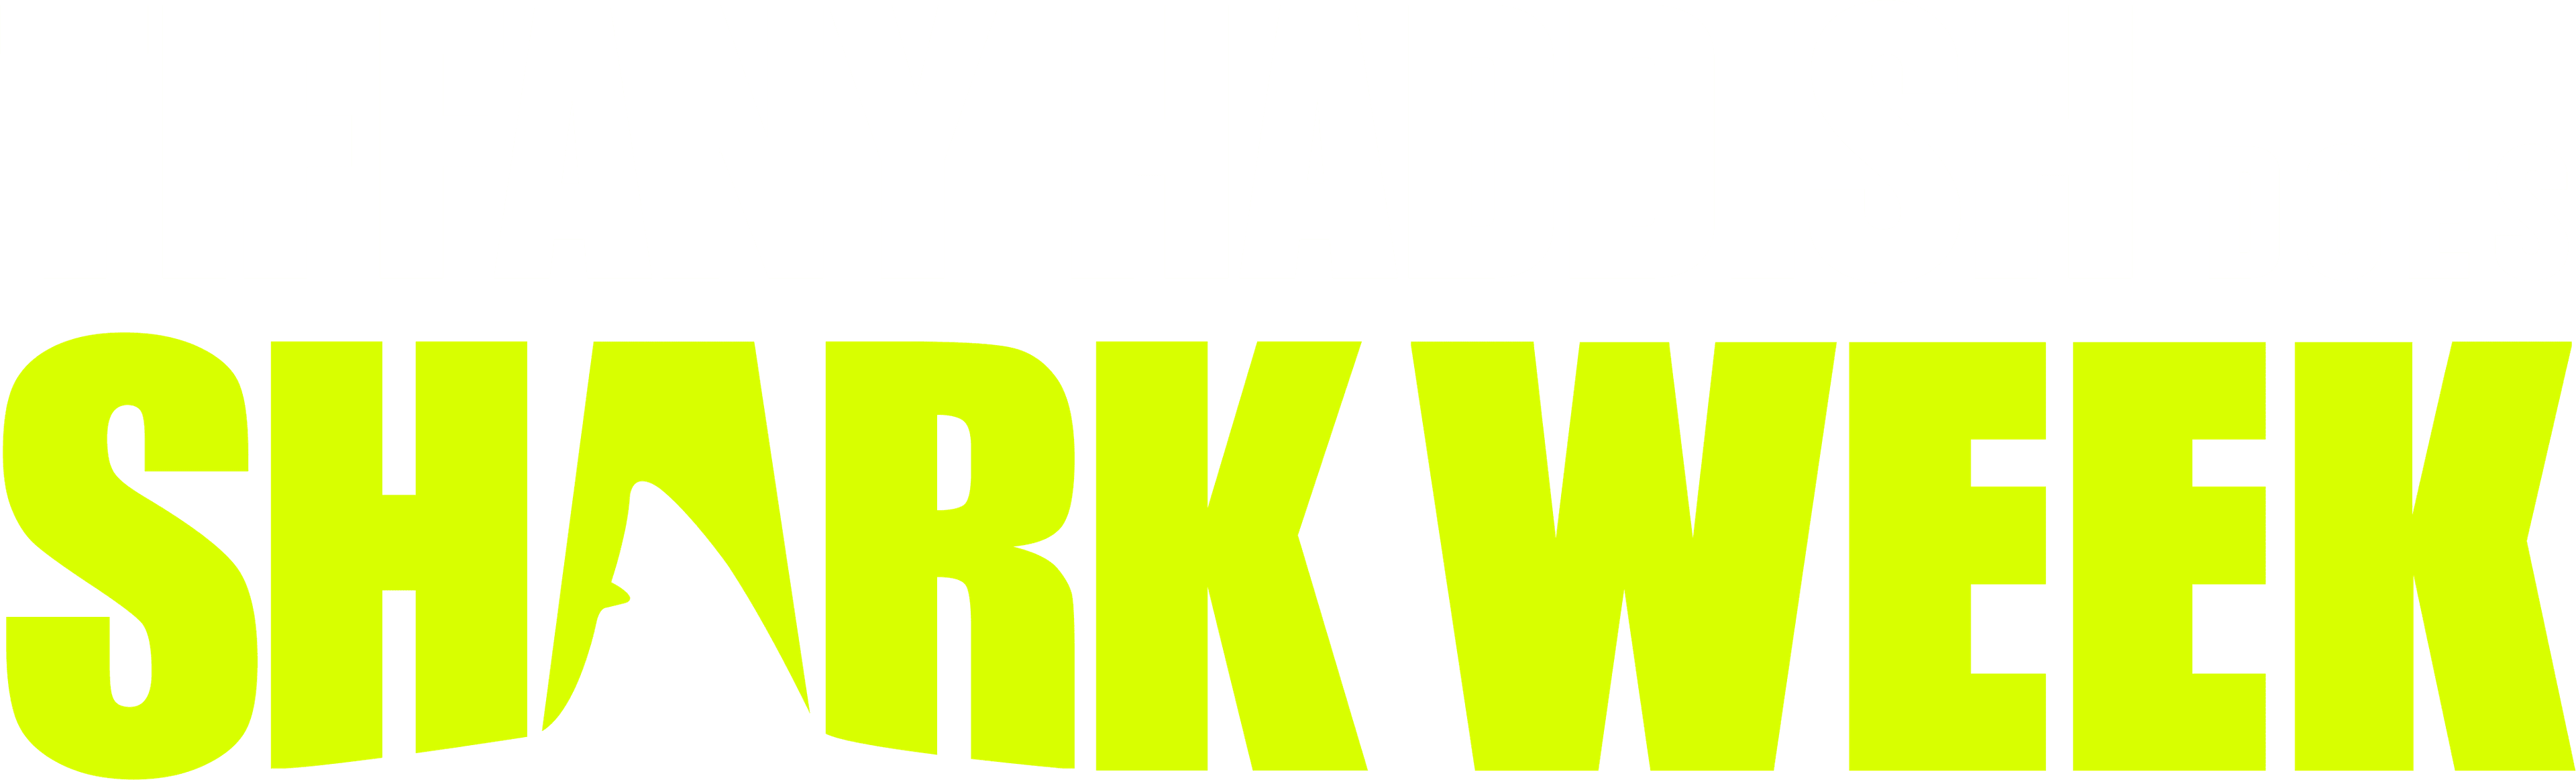 Tiffany Haddish Does Shark Week logo